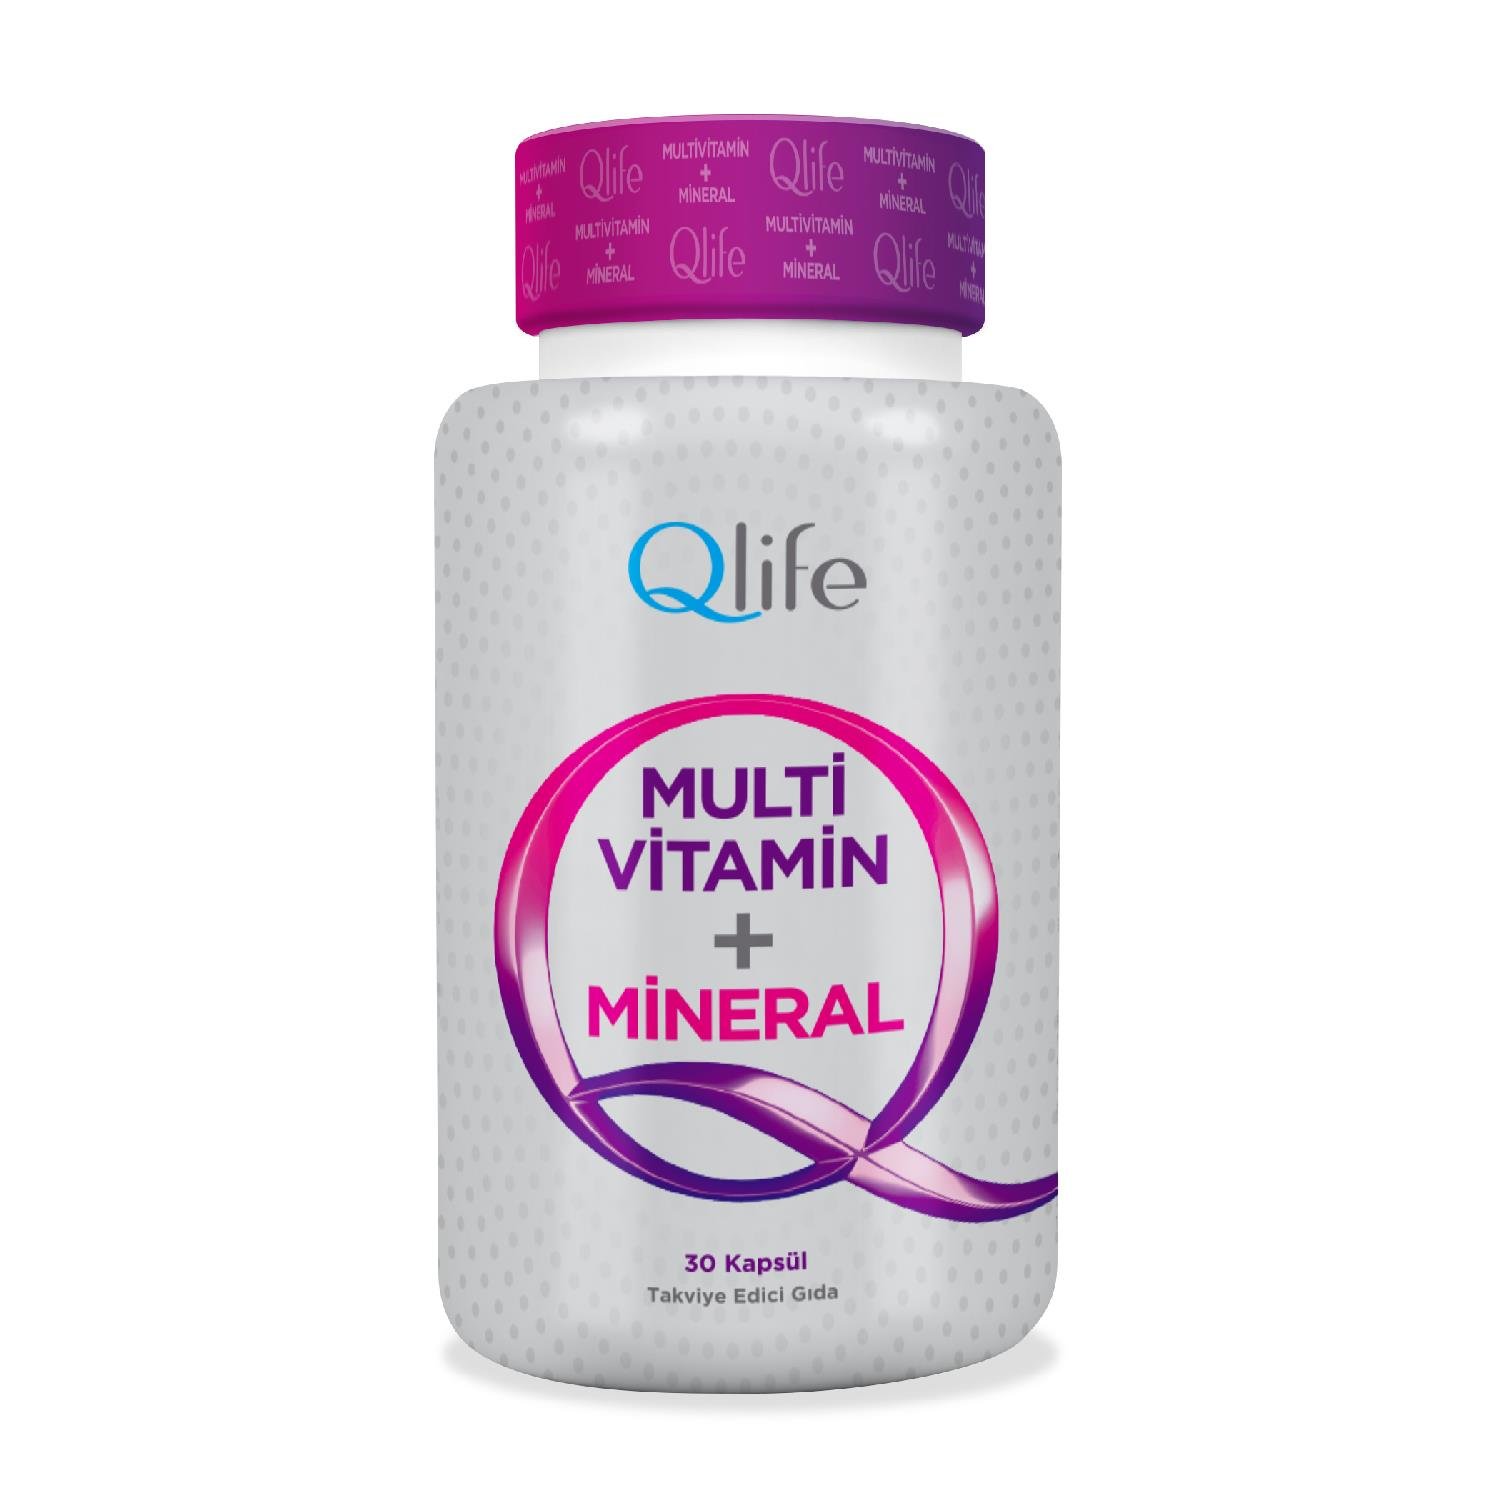 Qlife Multivitamin Mineral 30 Kapsül Vitamin